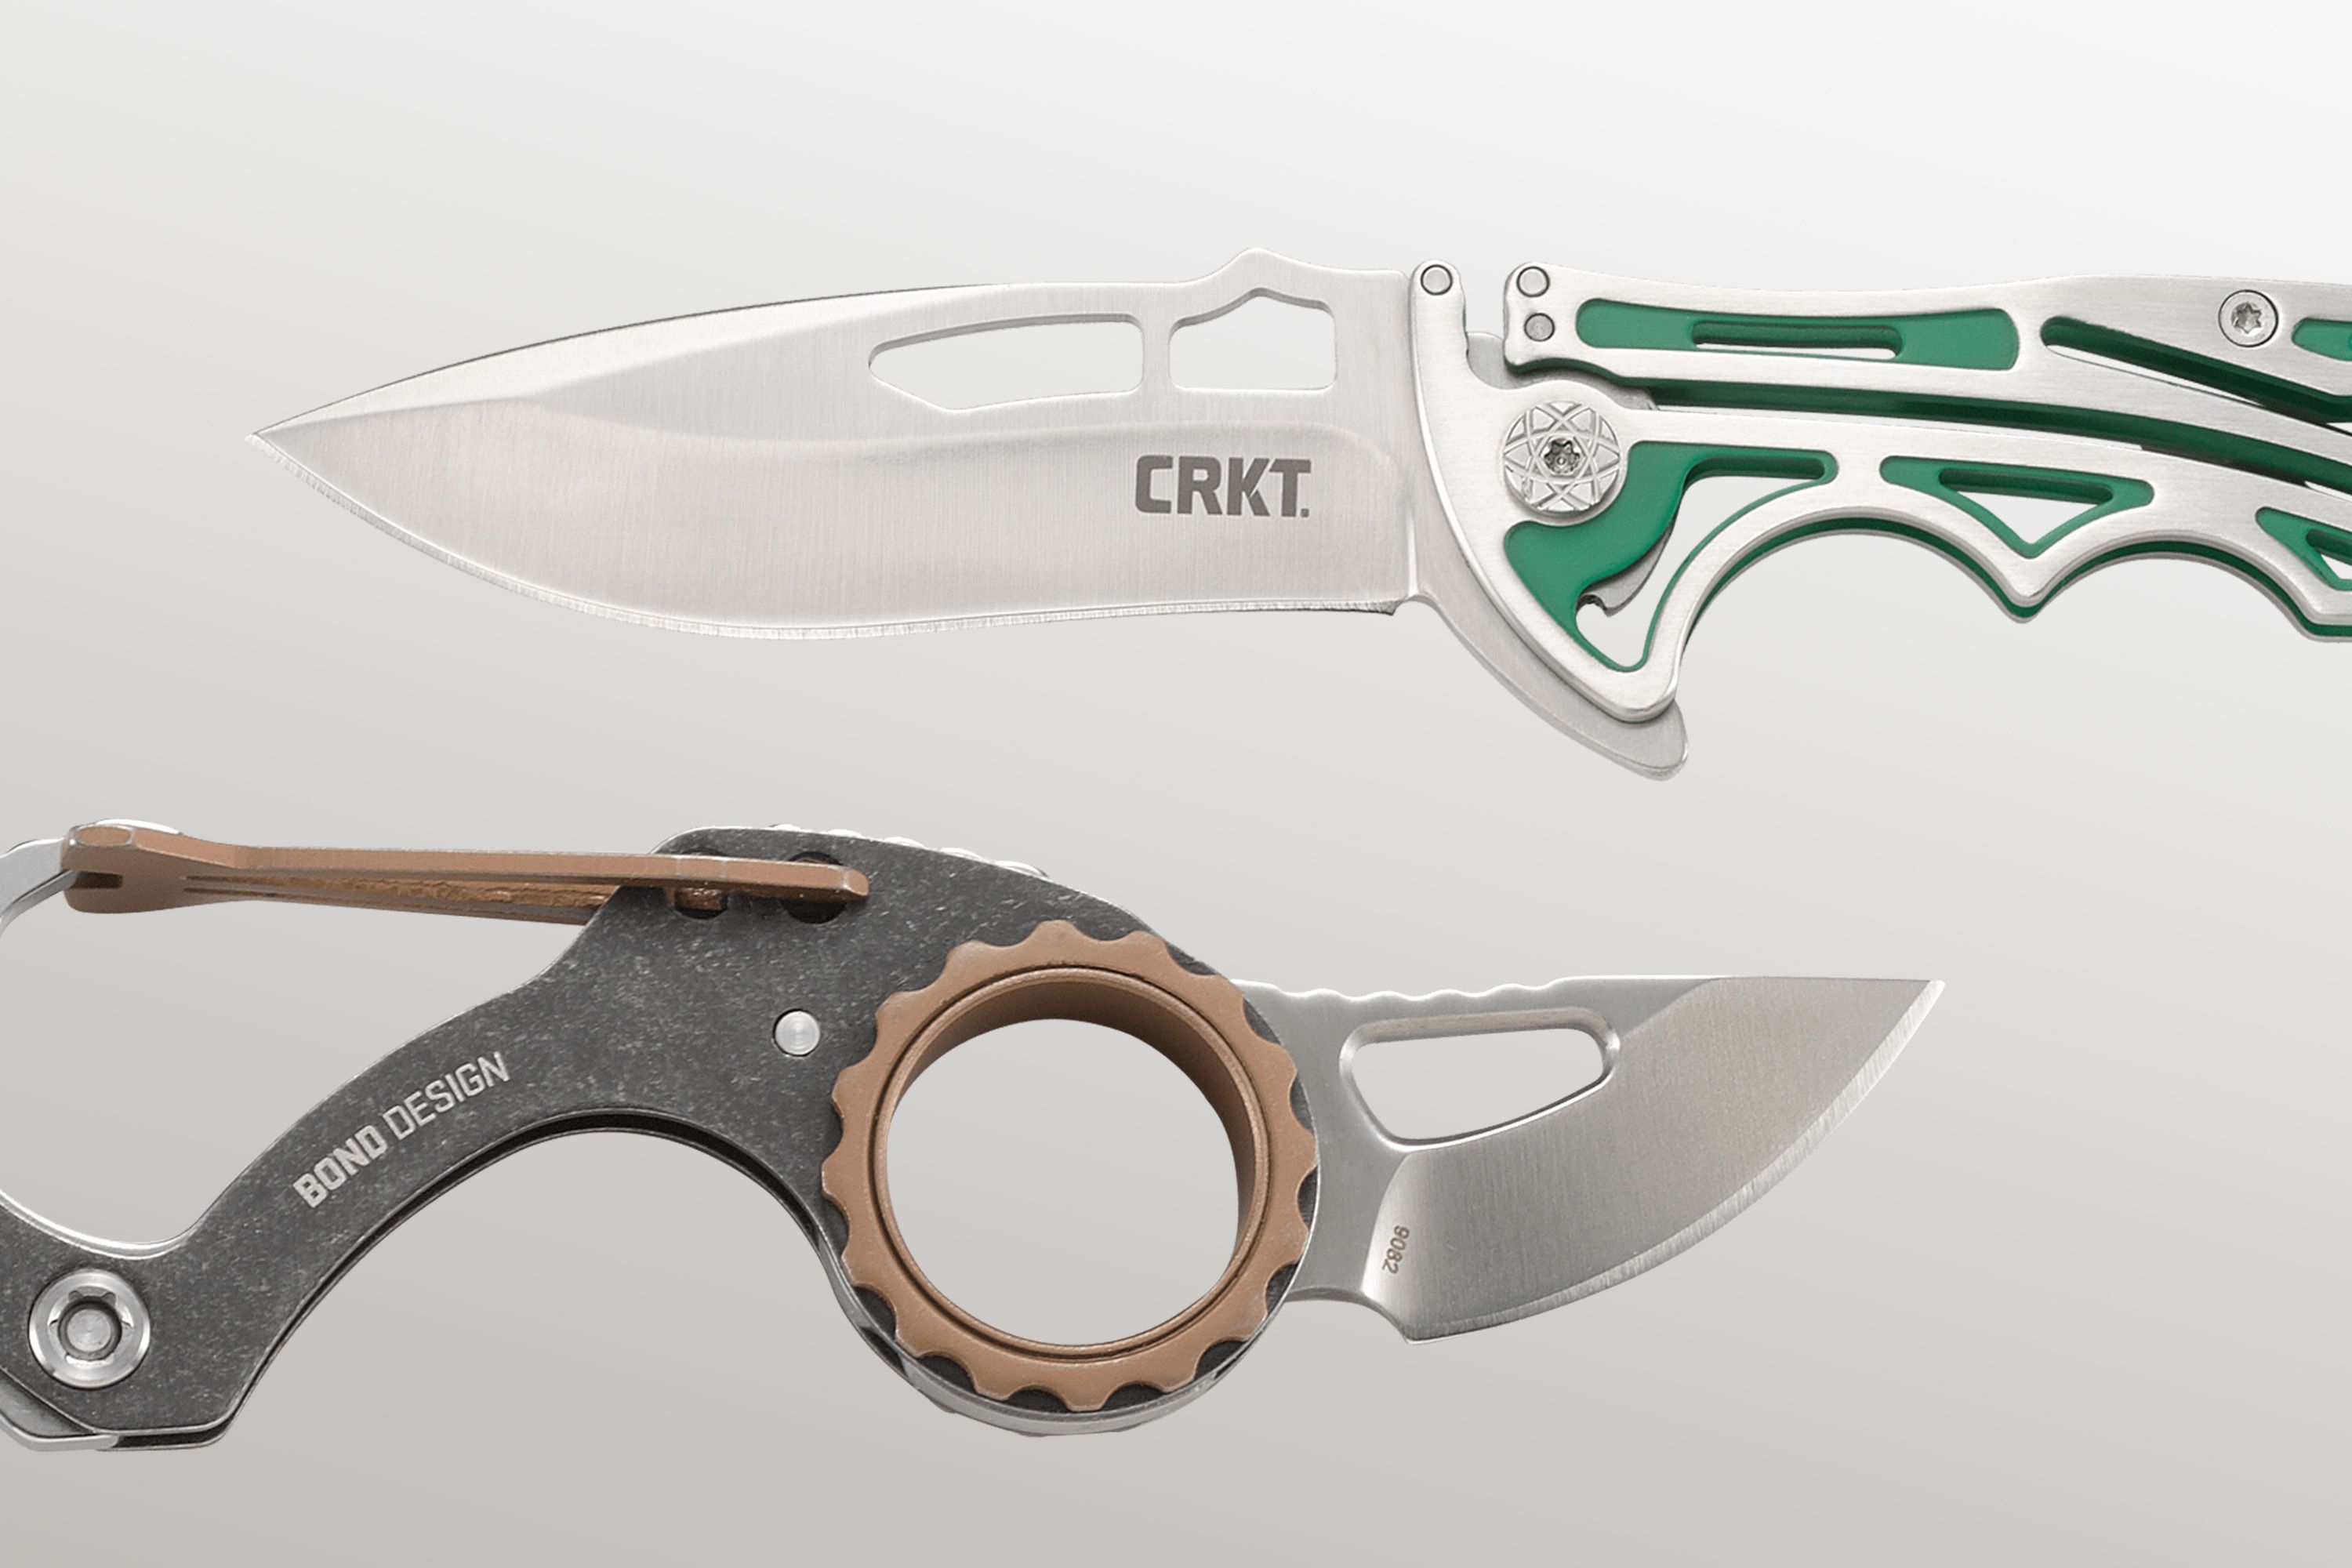 cool pocket knives